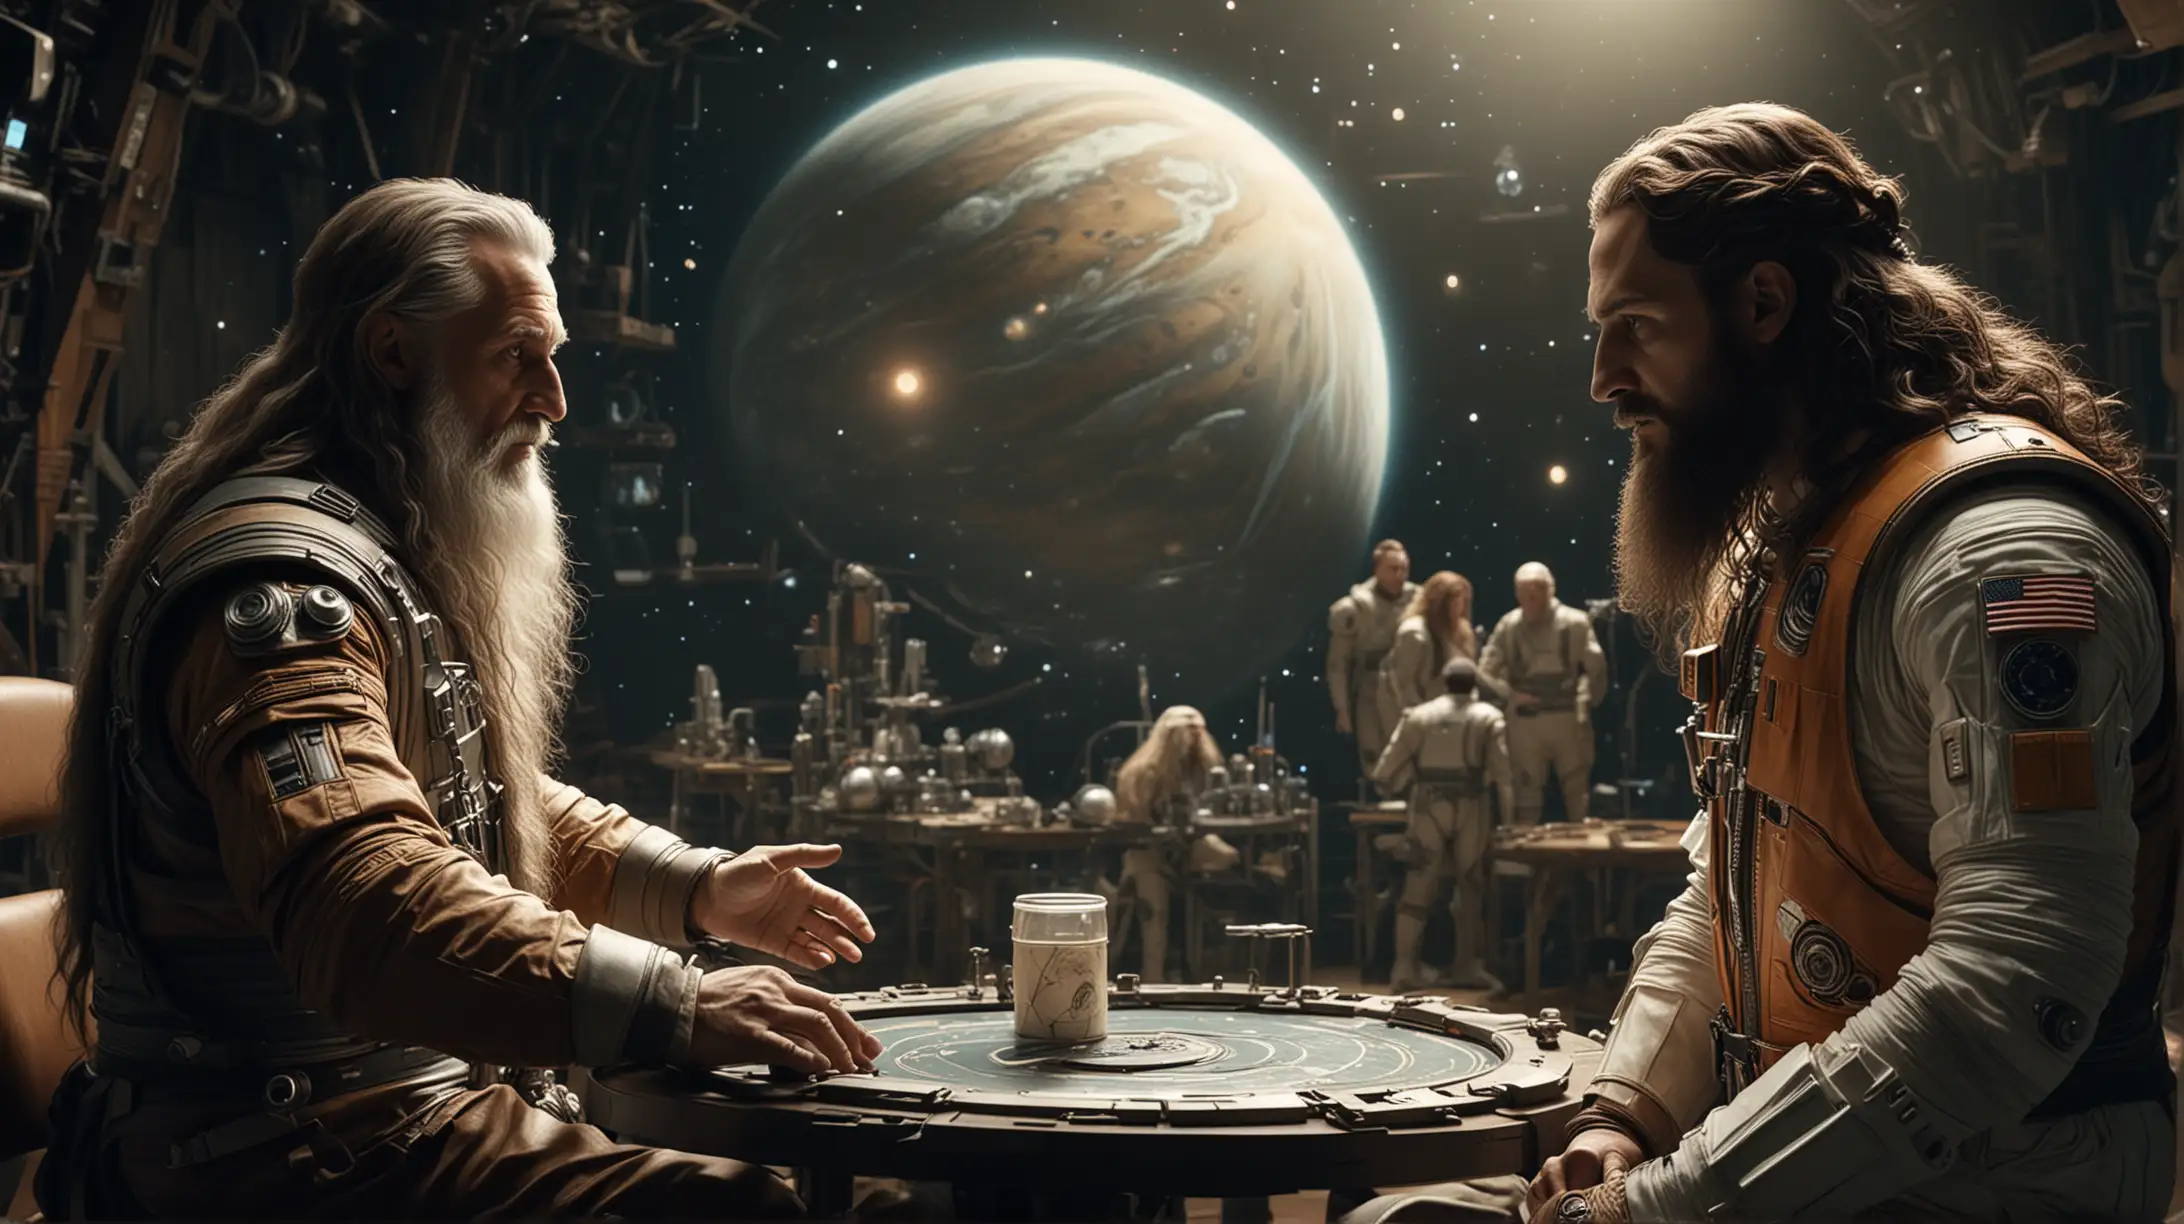 Leonardo da Vinci and Interstellar Astronaut Engage in Studio Dialogue